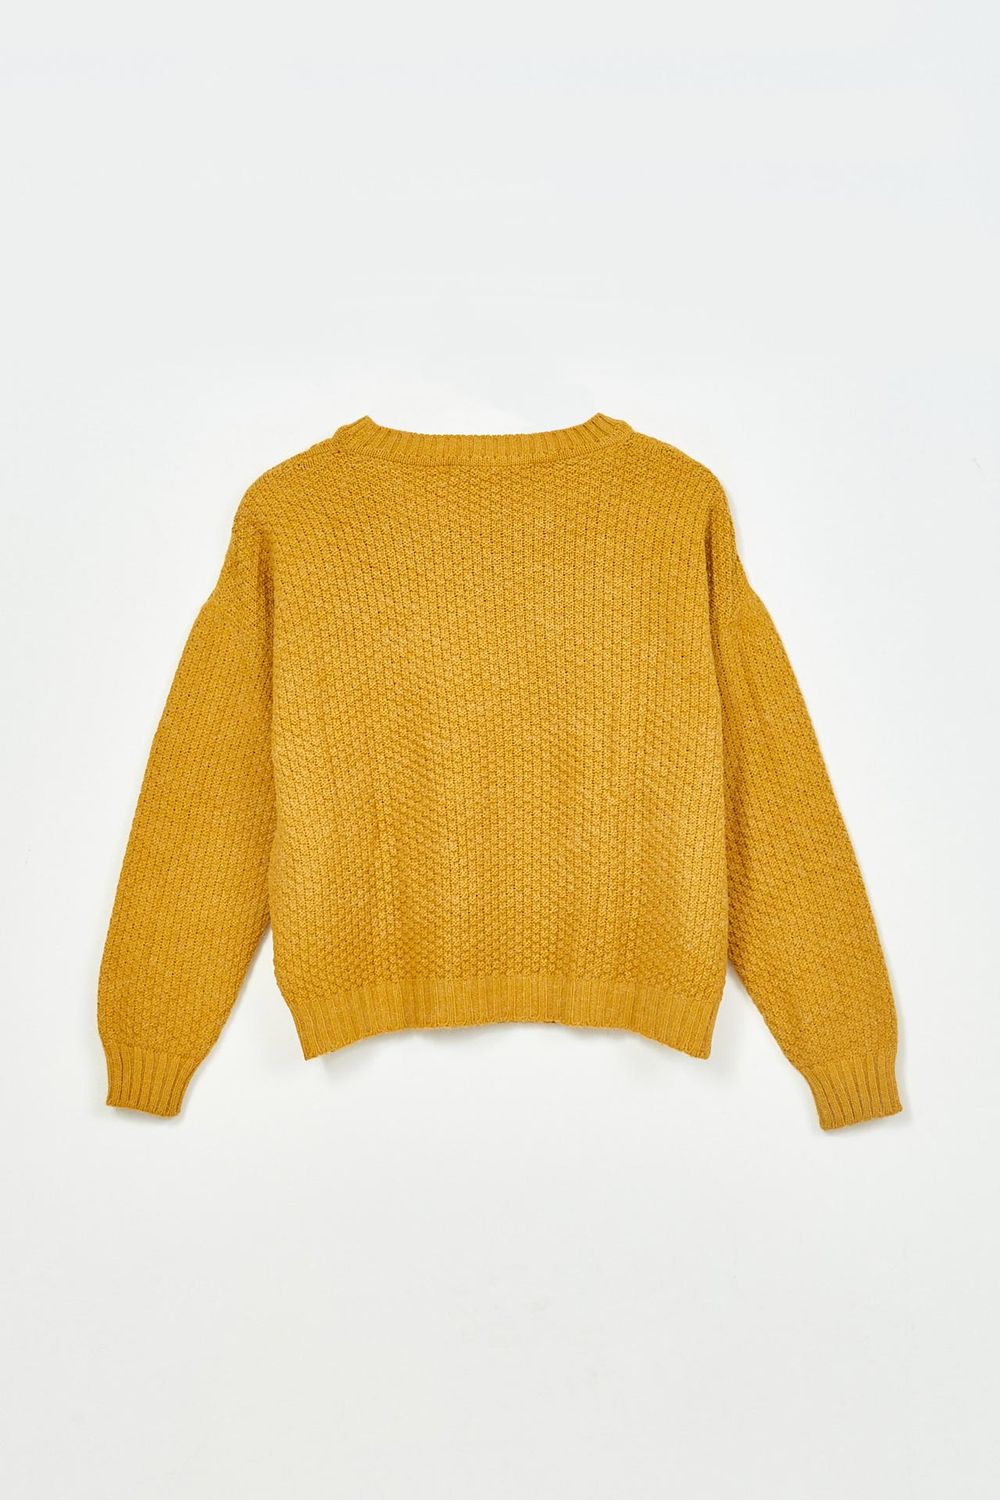 sweater-rei-mostaza-42